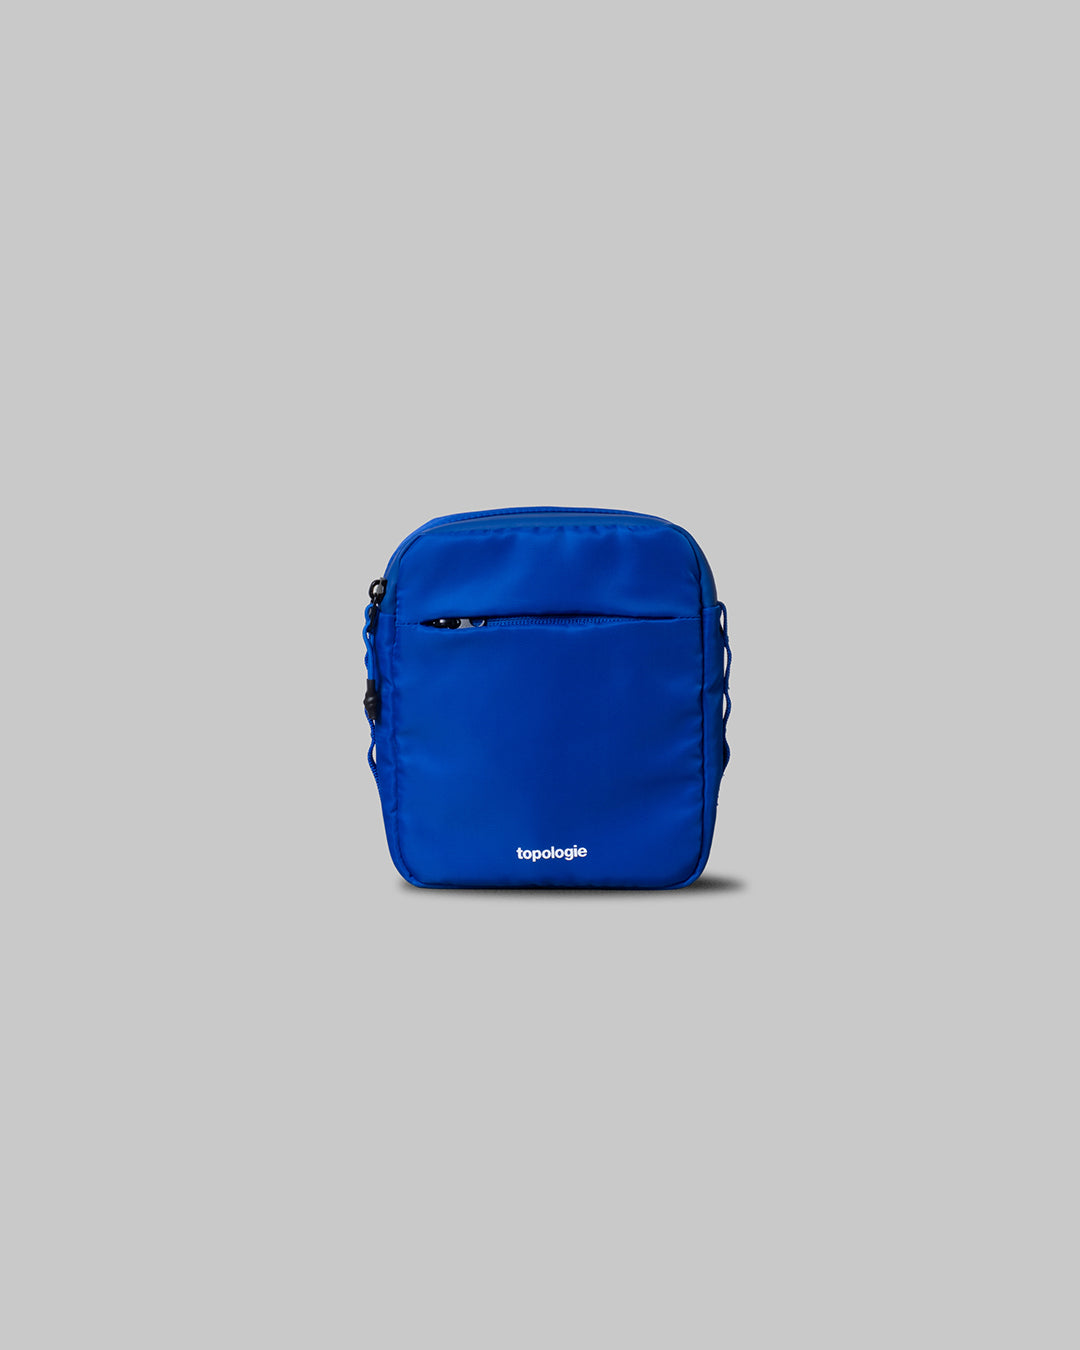 Topologie Ware Bags Tinibox - Future Blue